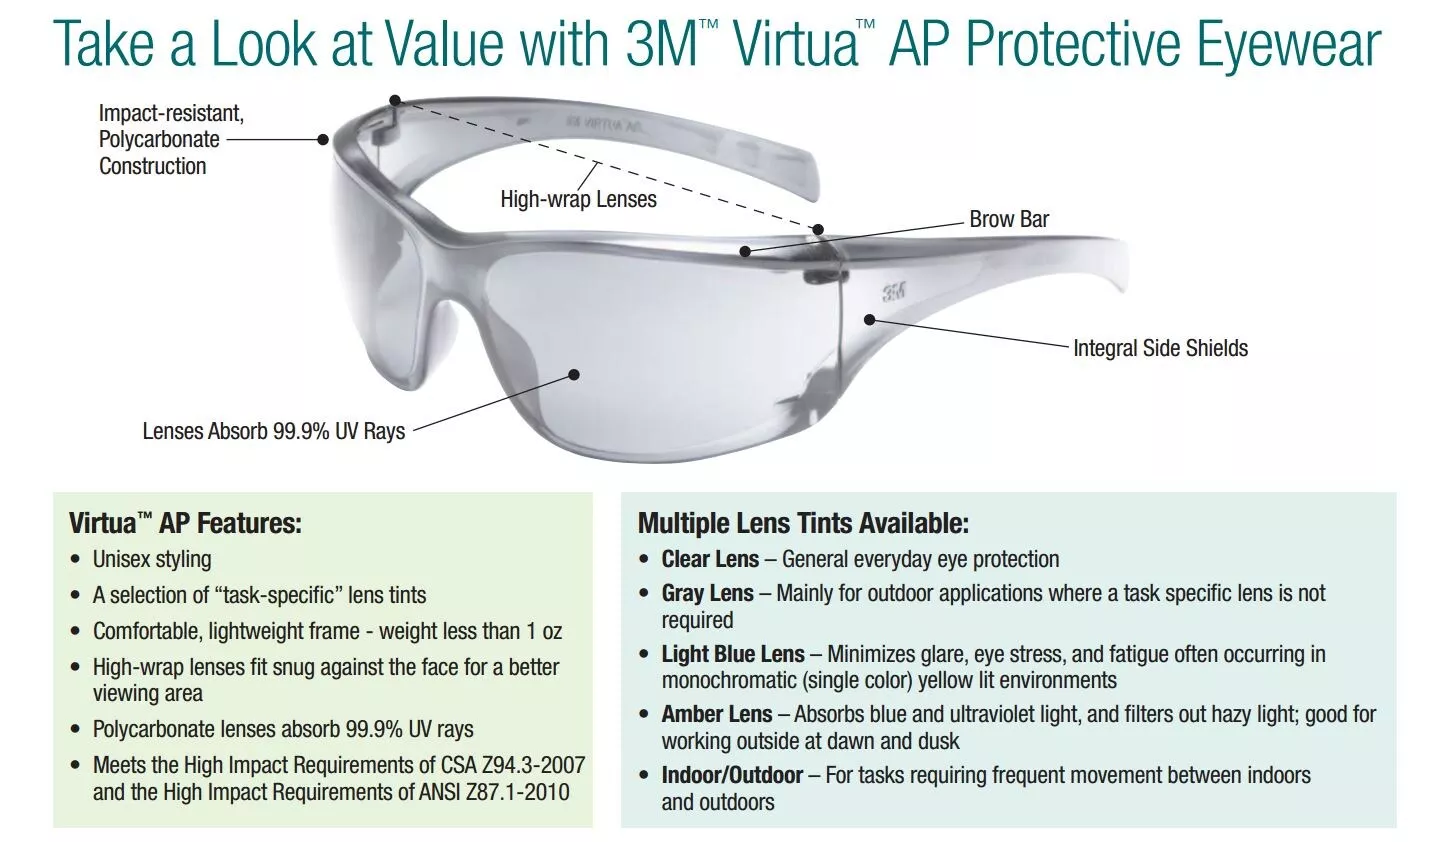 UPC 10078371118164 | 3M™ Virtua™ AP Protective Eyewear 11816-00000-20 Light Blue Hard Coat
Lens